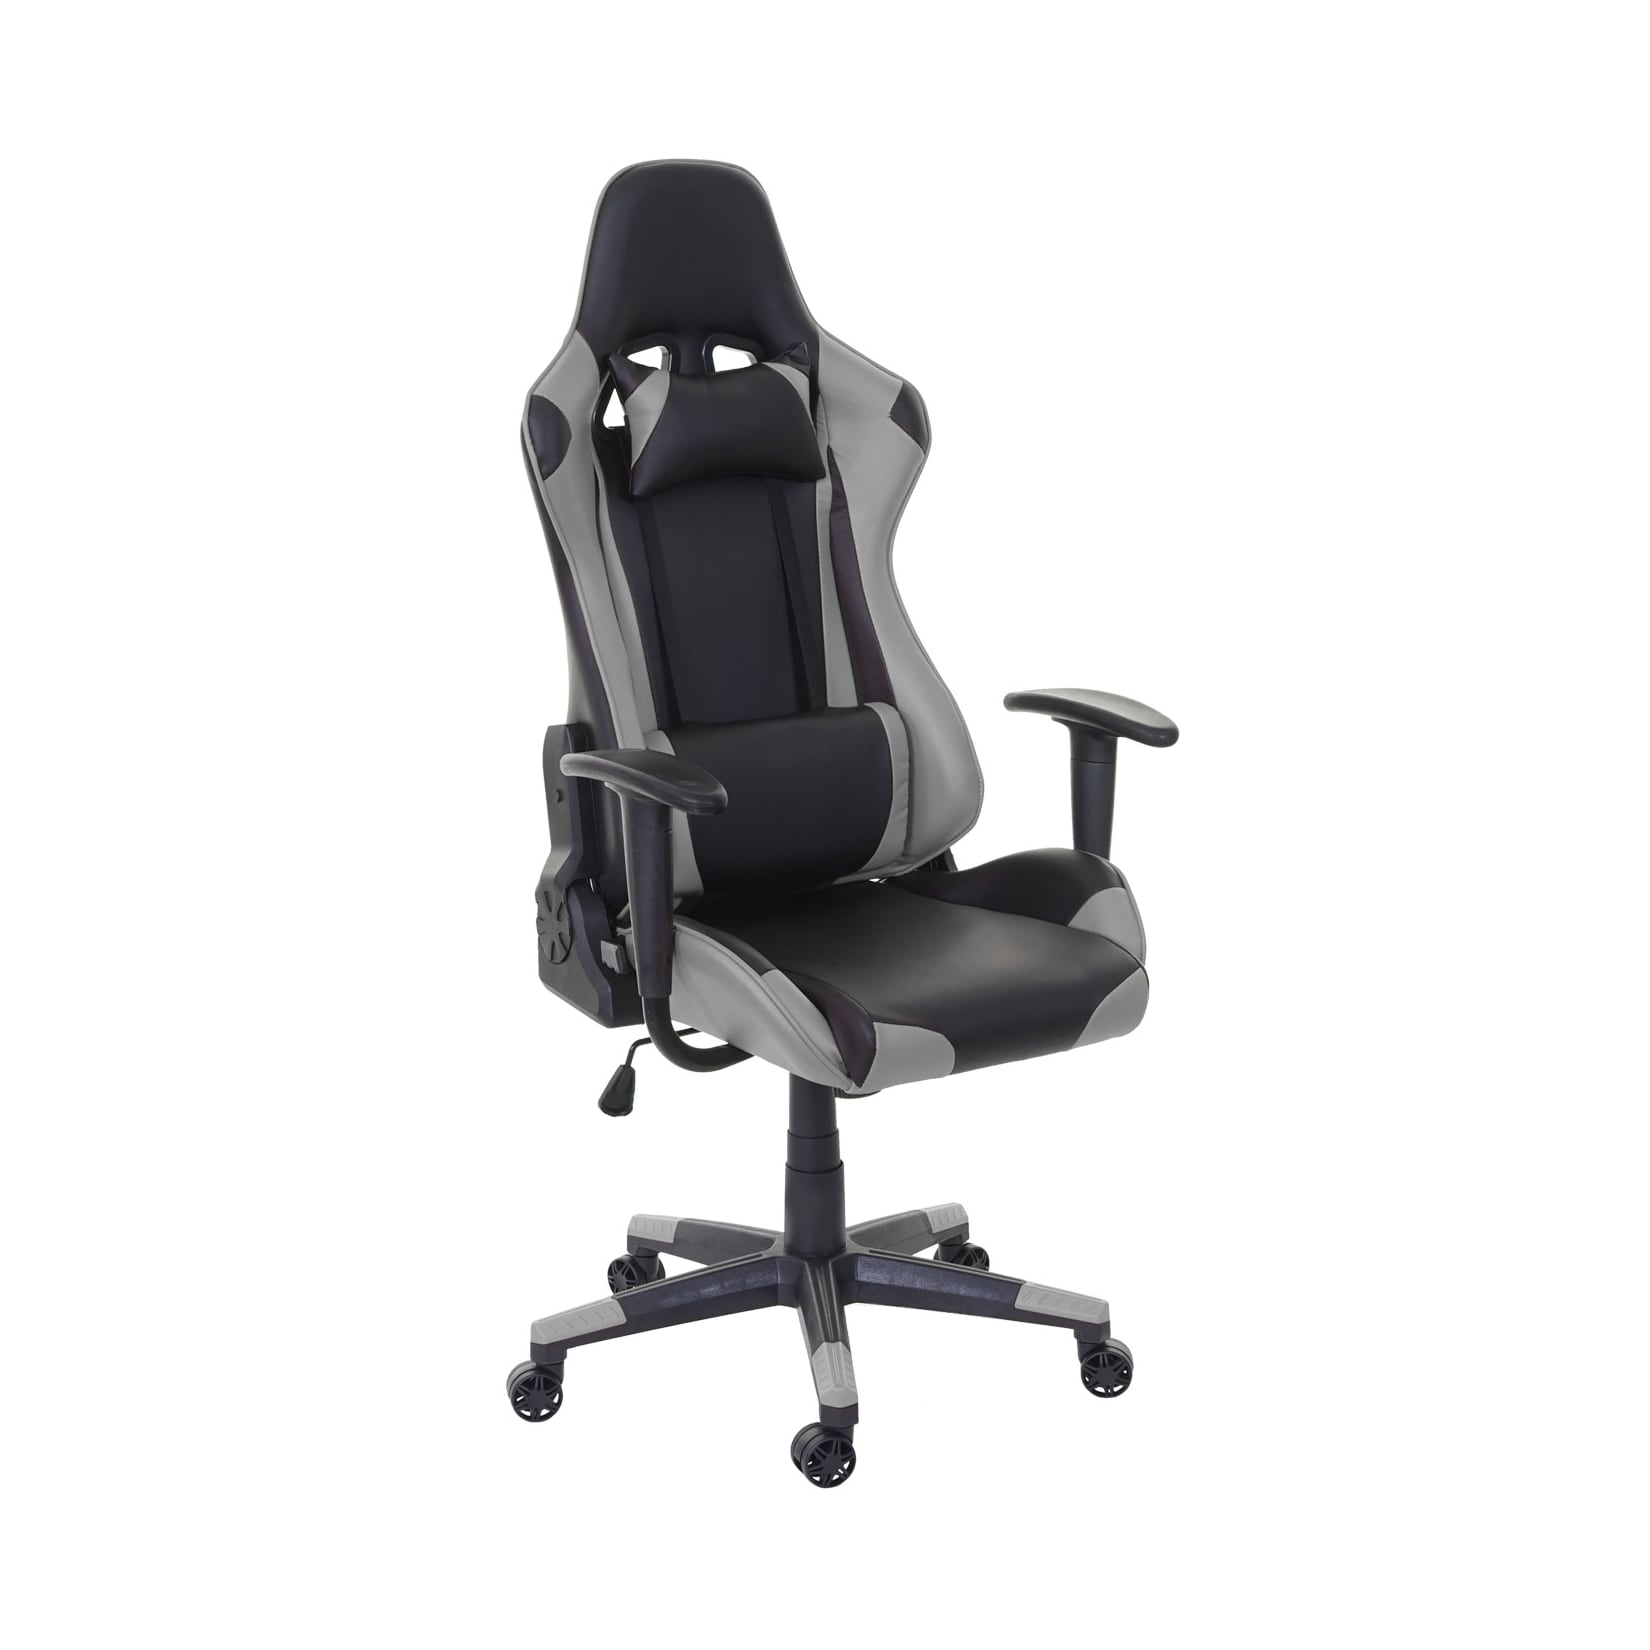 MCW Bürostuhl -D25, Schreibtischstuhl Gamingstuhl Chefsessel Bürosessel, 150kg belastbar Kunstleder ~ schwarz/grau